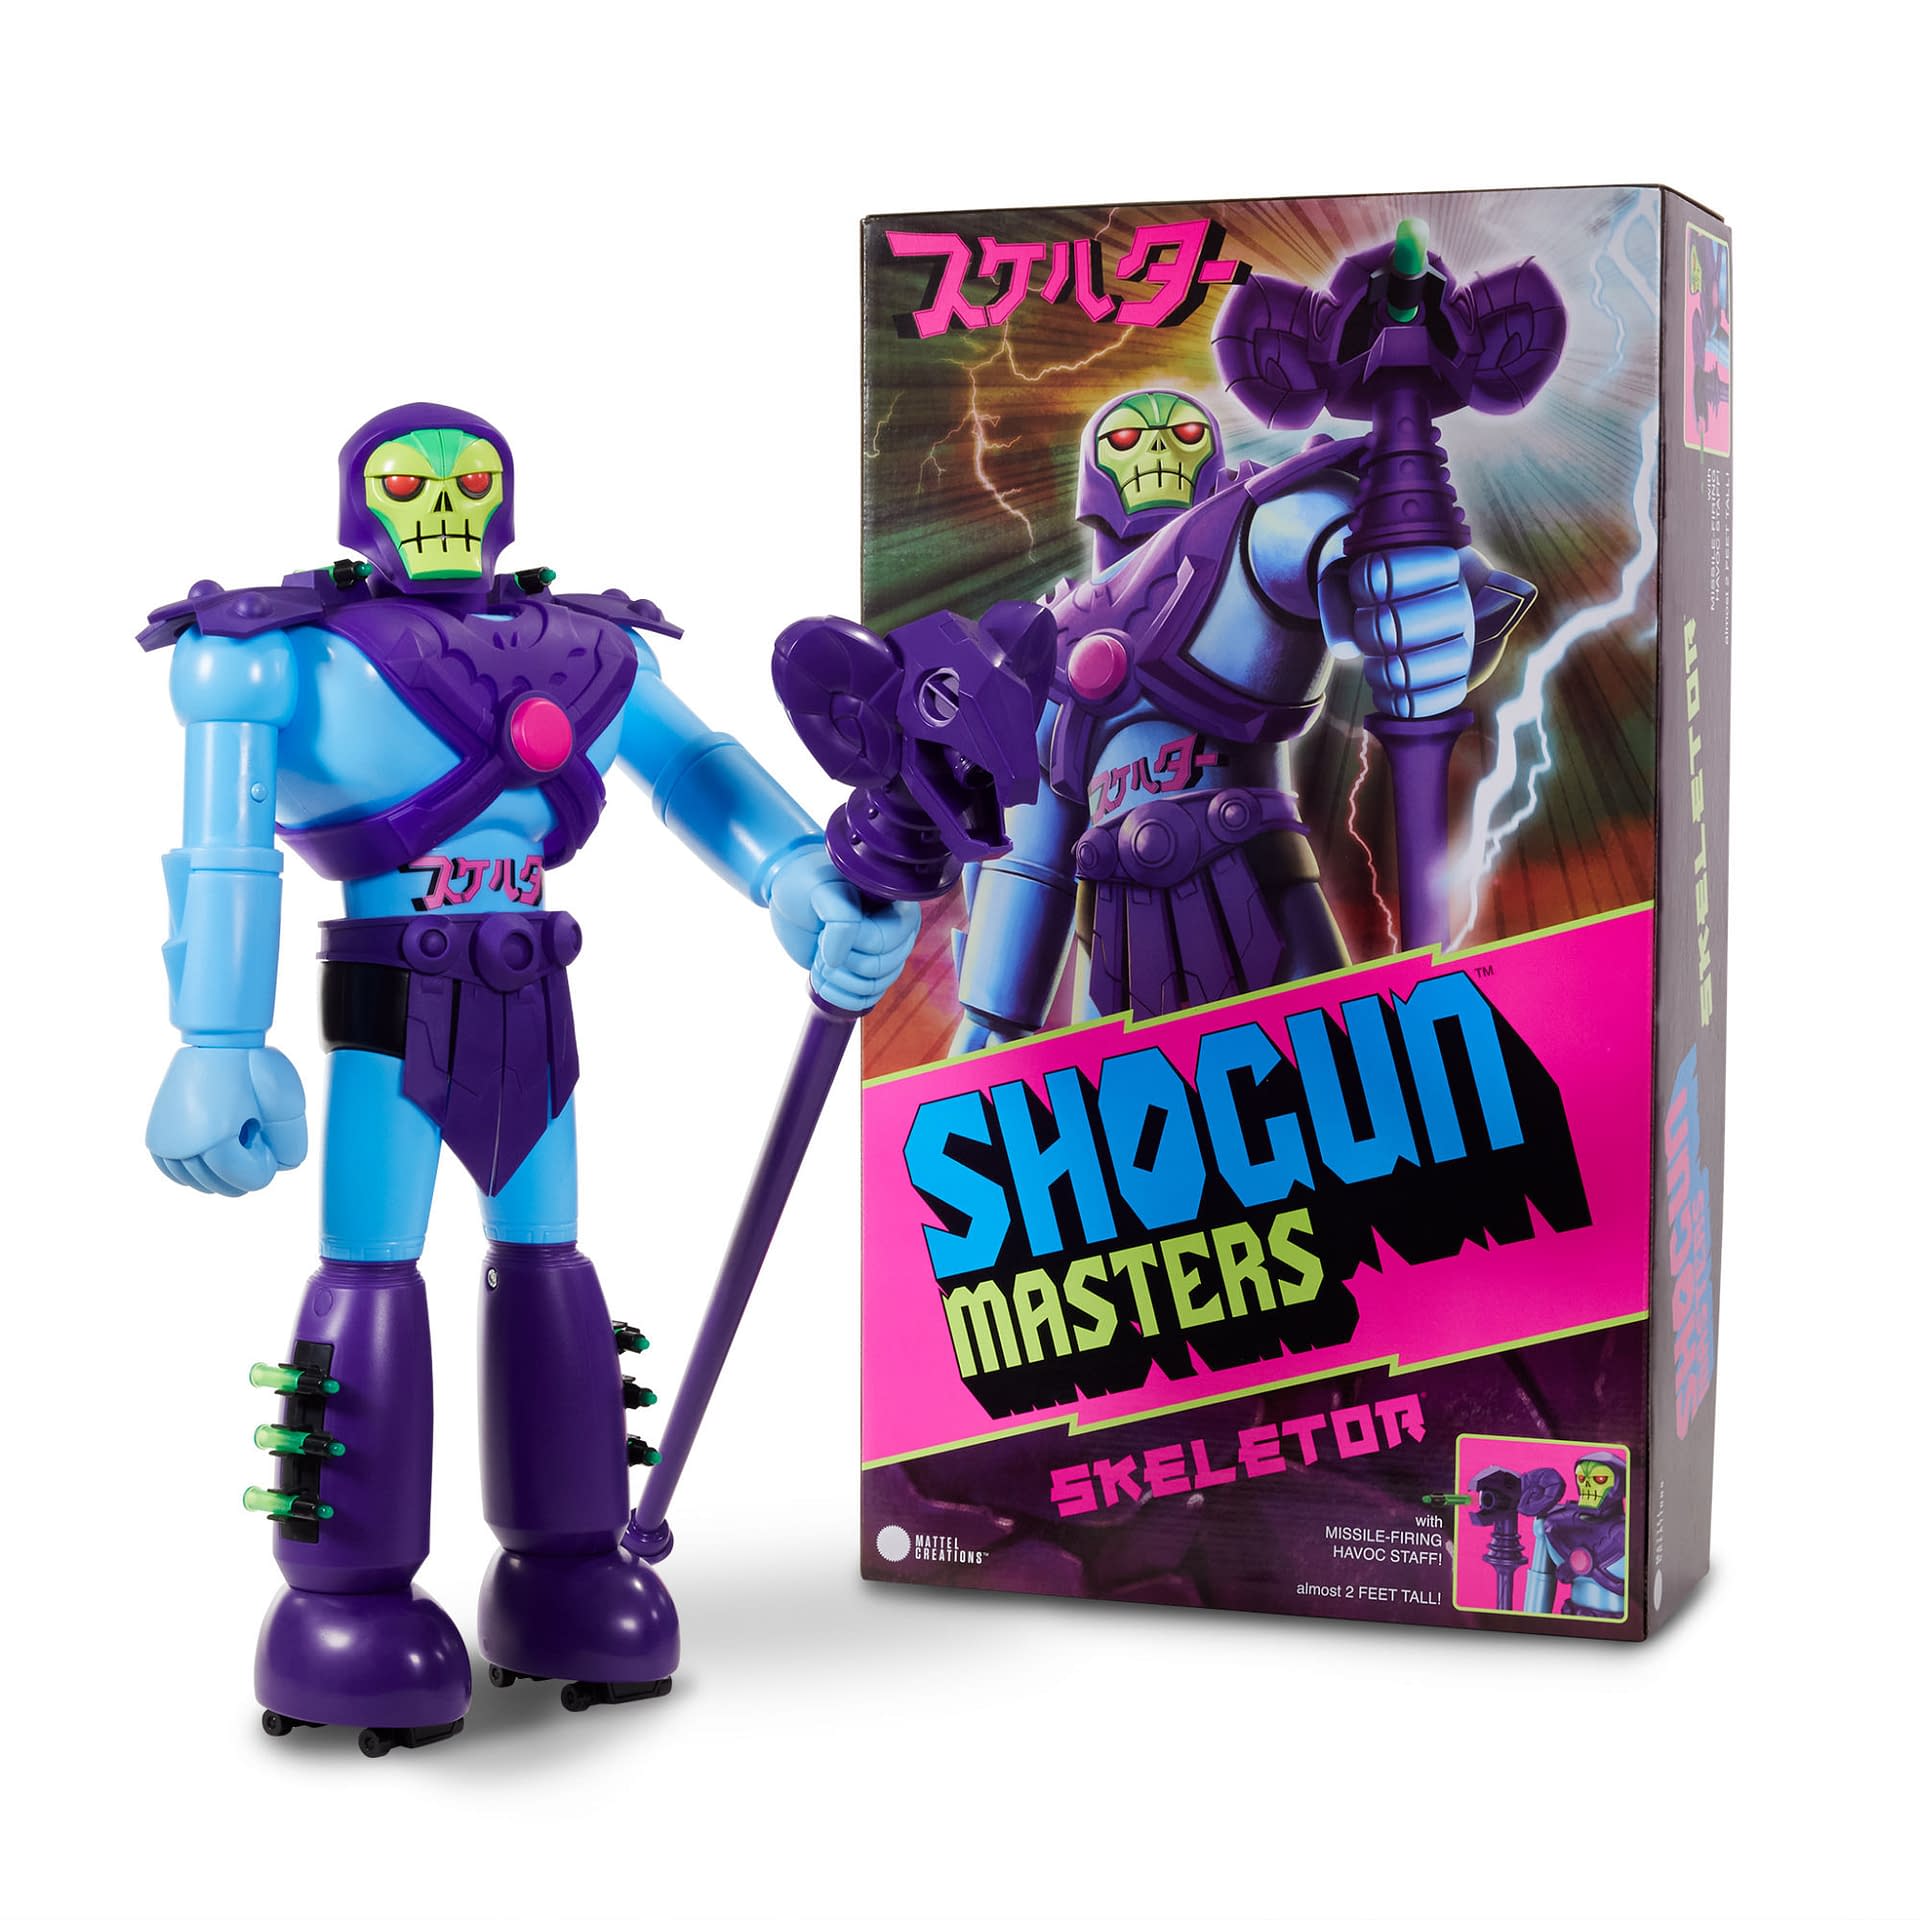 Skeletor Shogun Masters Figure Revealed For Mattel Creations